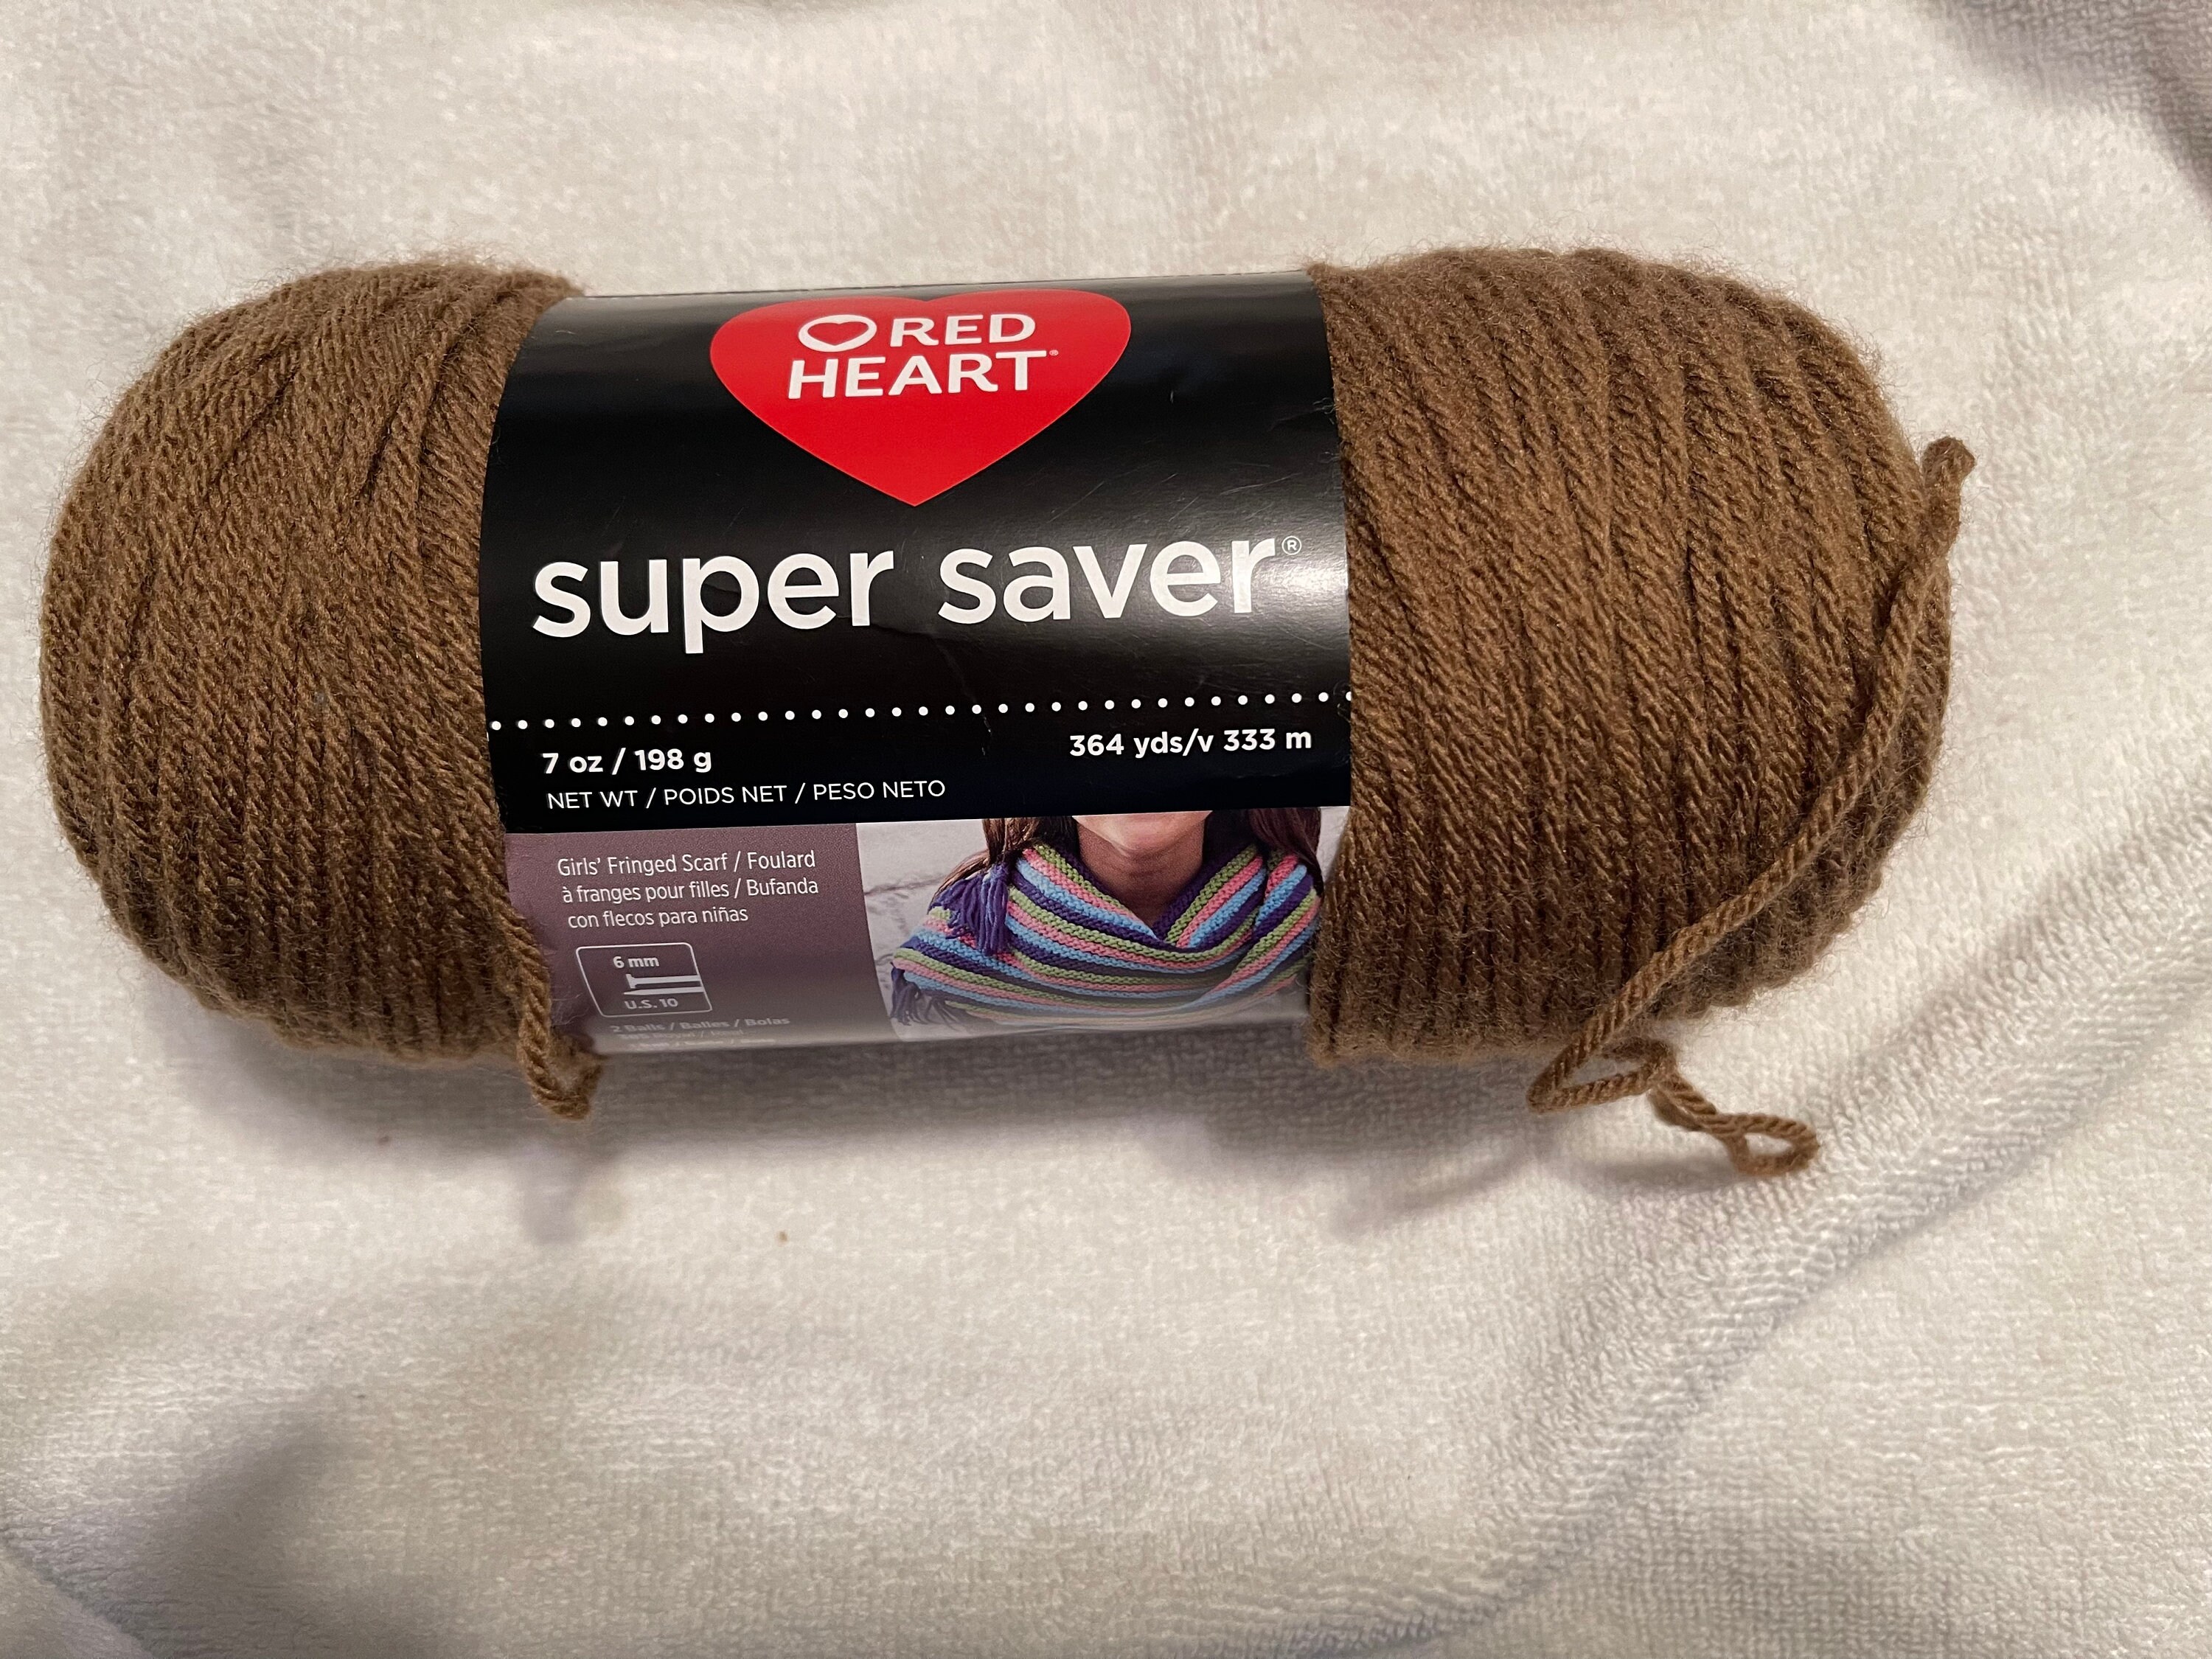 Red Heart Super Saver Yarn - Warm Brown